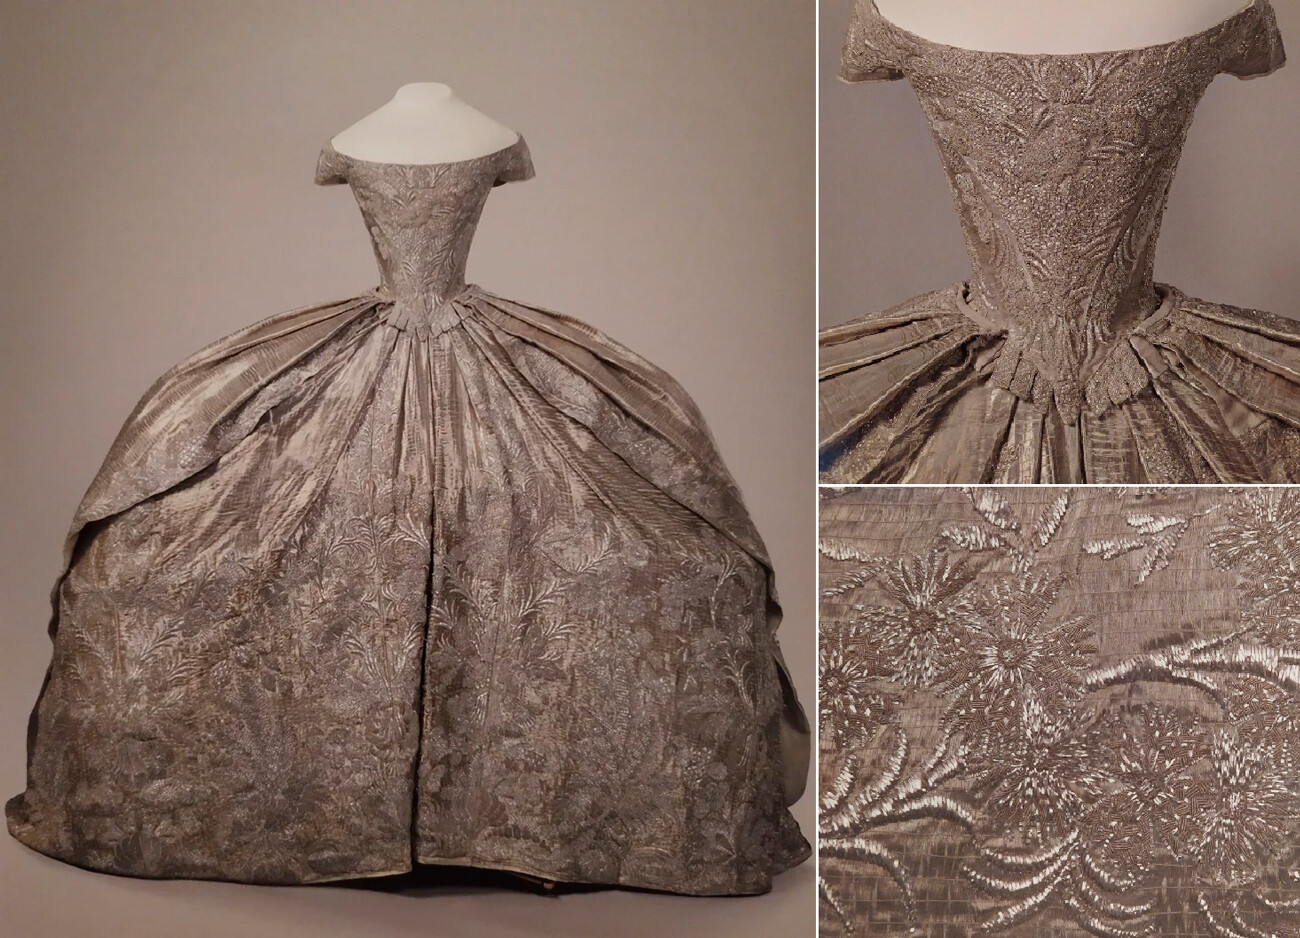 The wedding dress of Ekaterina Alexeevna, future Empress Catherine the Great. Russia, 1745.